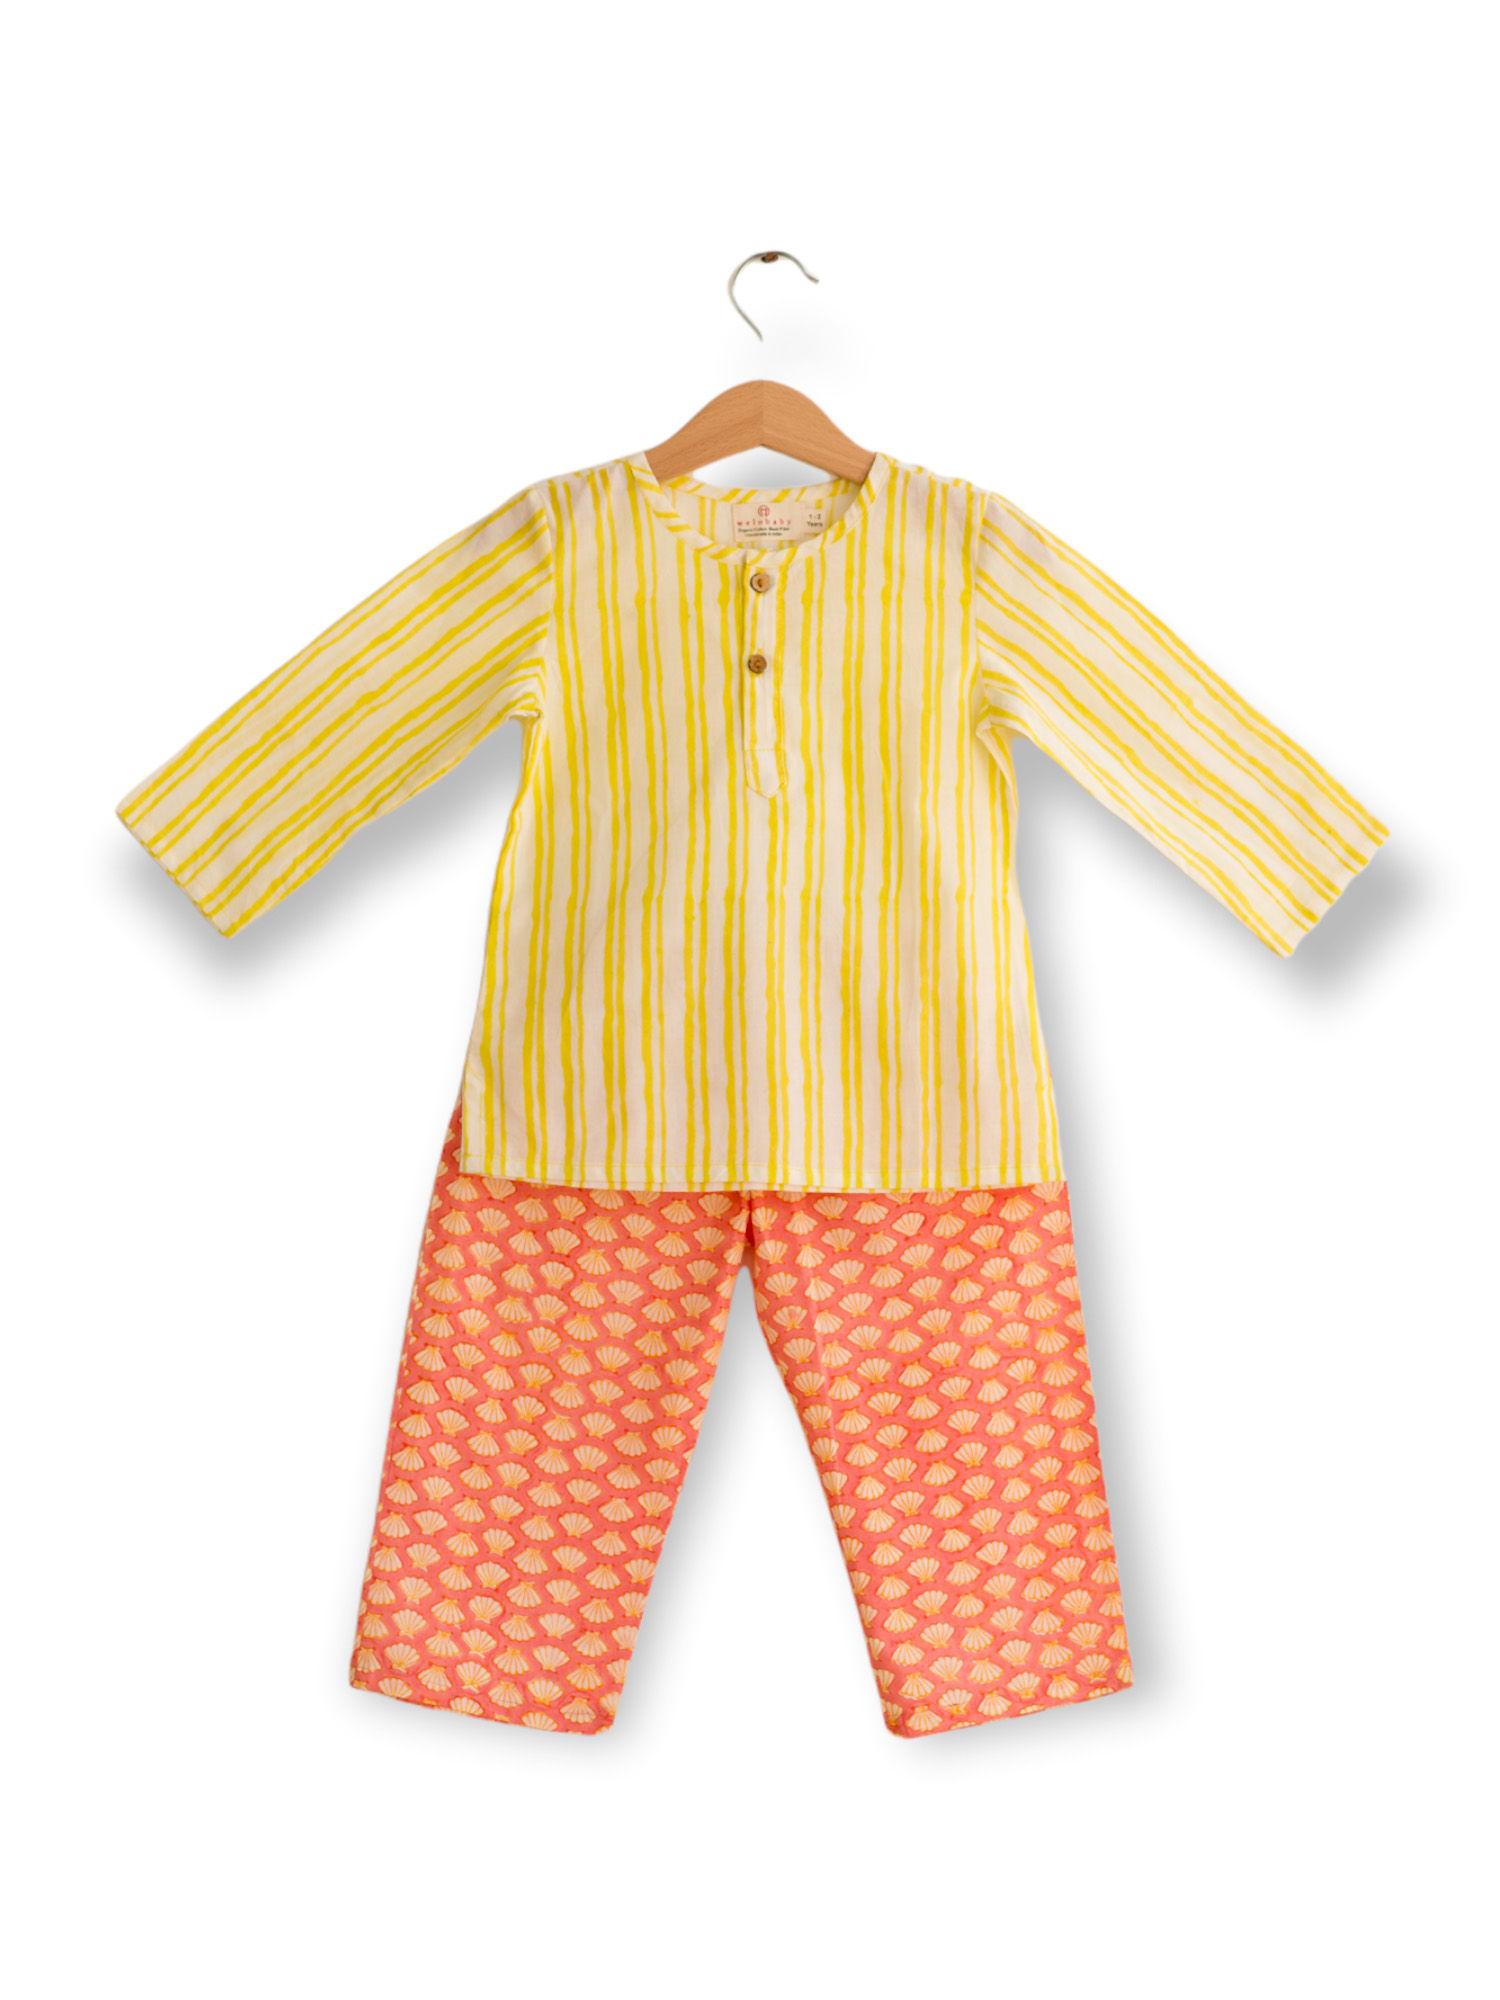 sea shells and stripes organic cotton pyjama set-pink,yellow (set of 2)